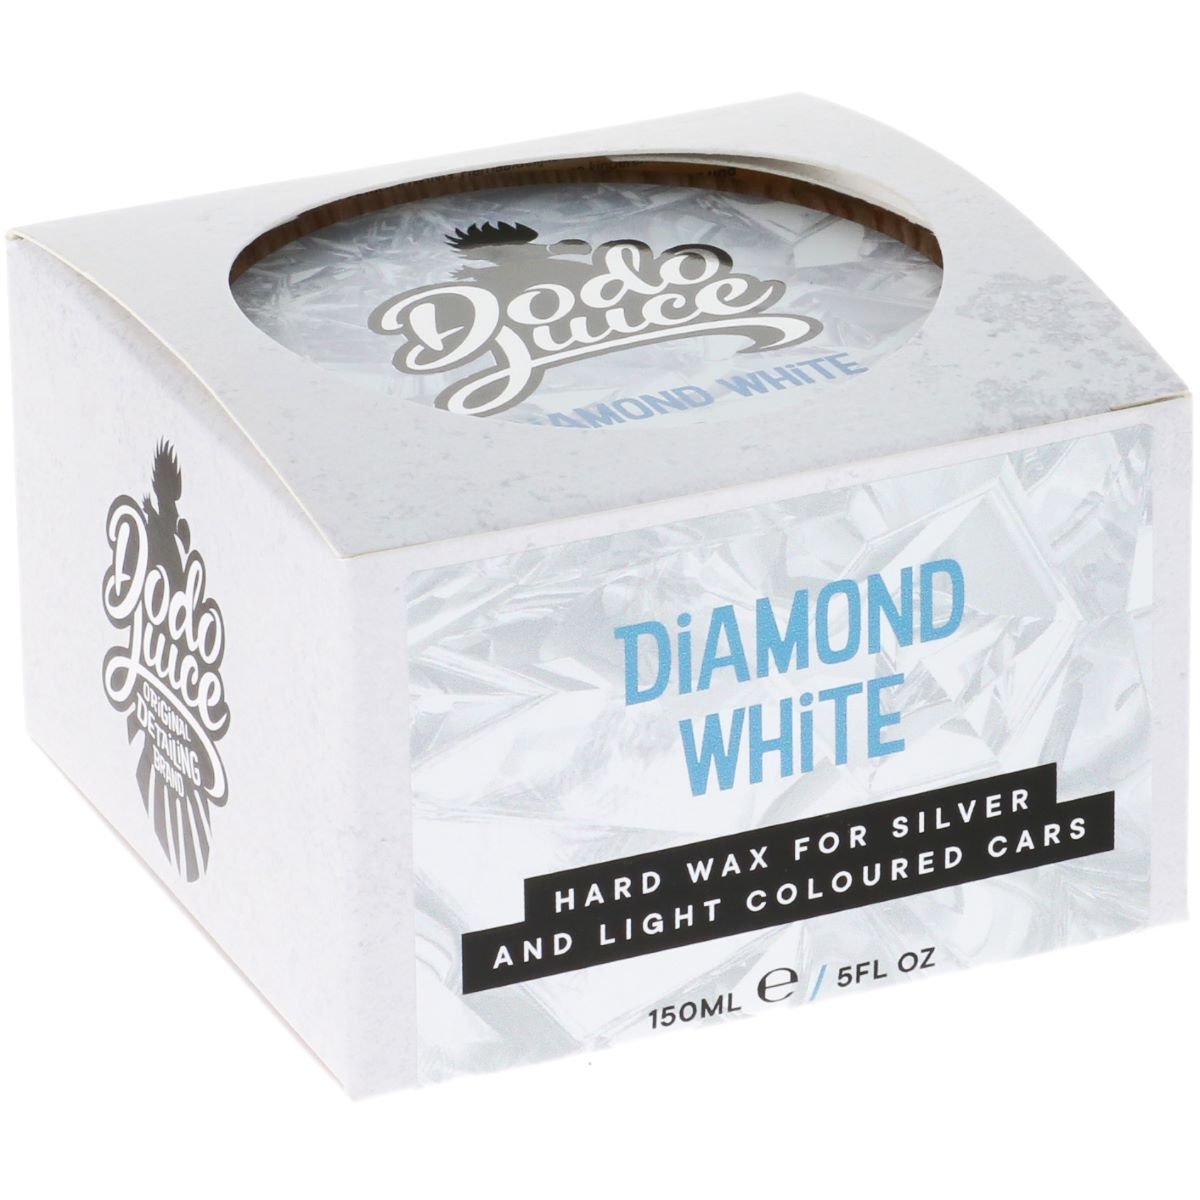 Diamond White hard wax for light coloured cars - 150ml